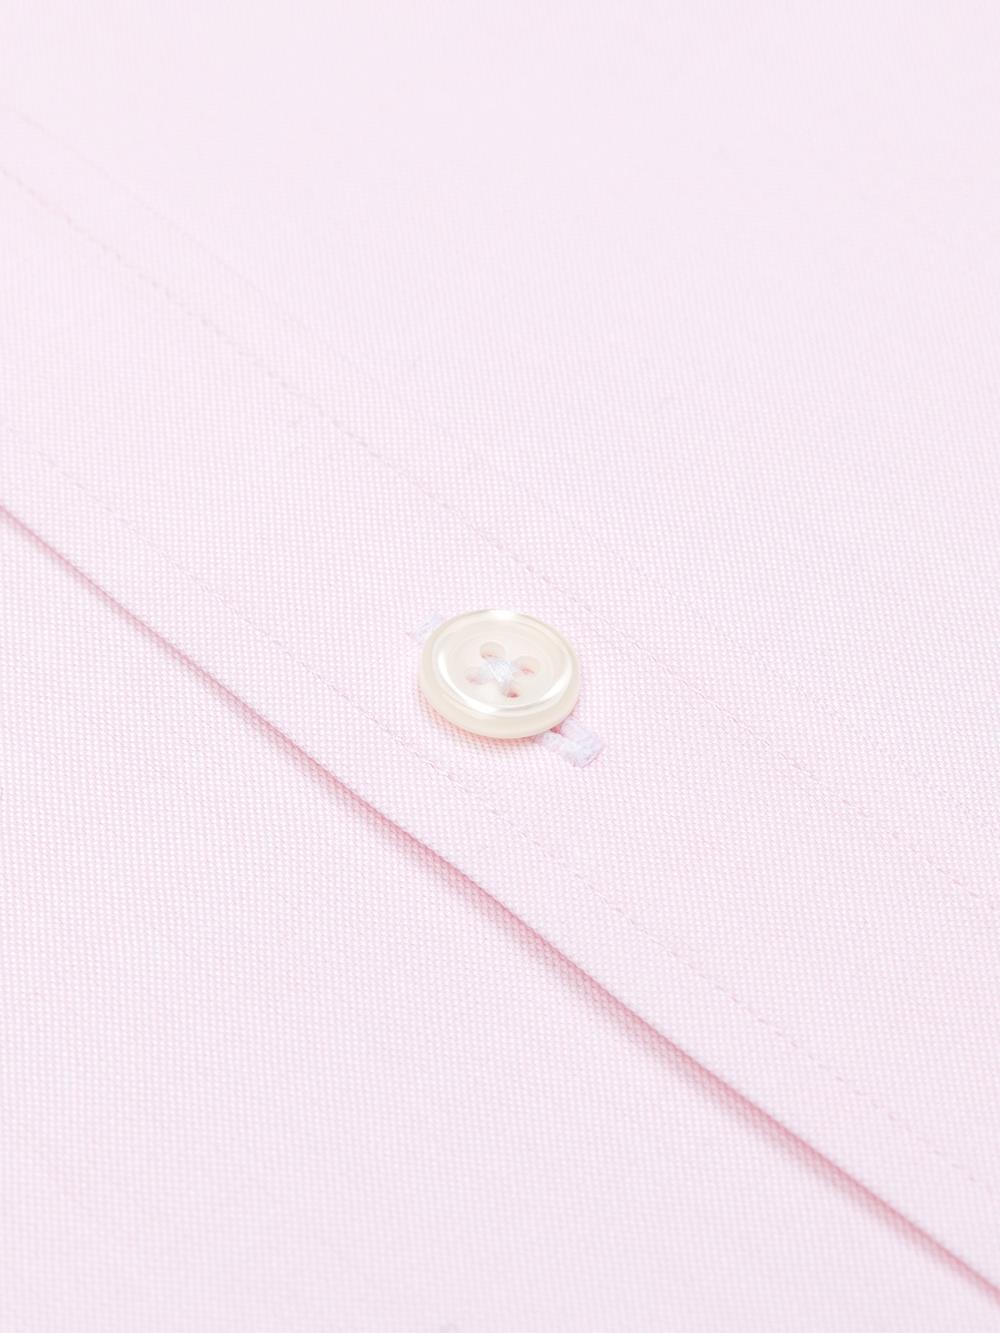 Pink pin point shirt